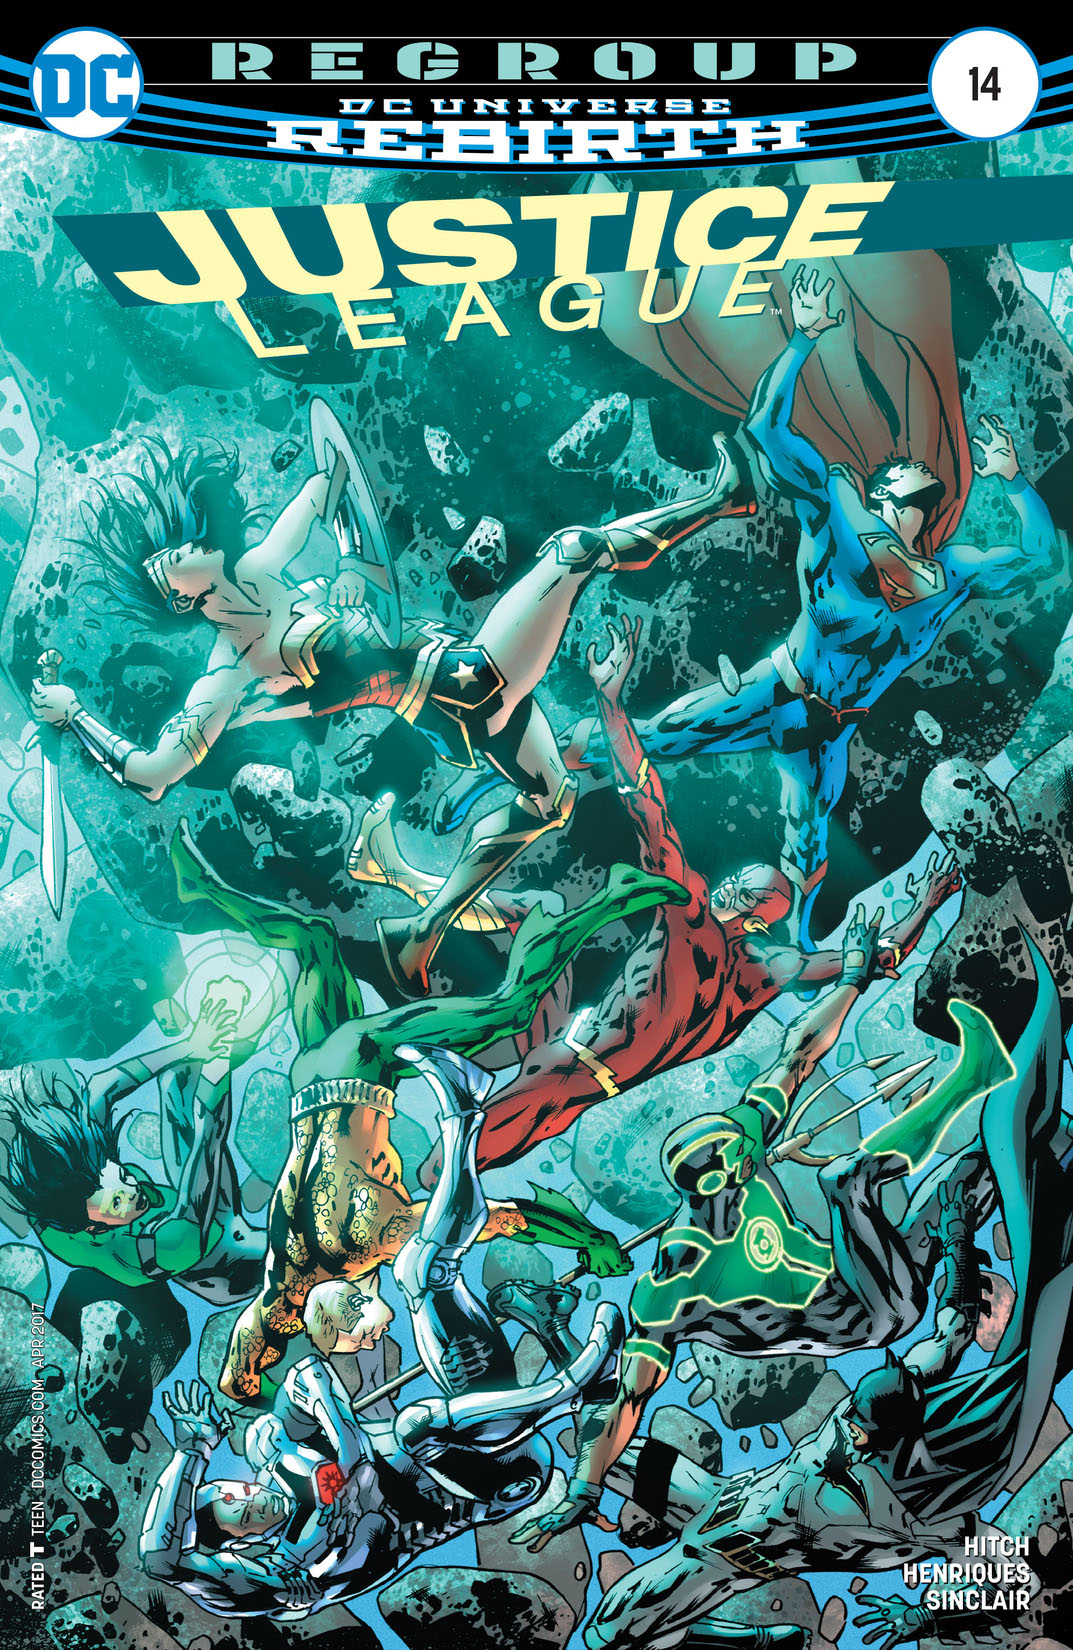 Justice League (2016-) #14 preview images